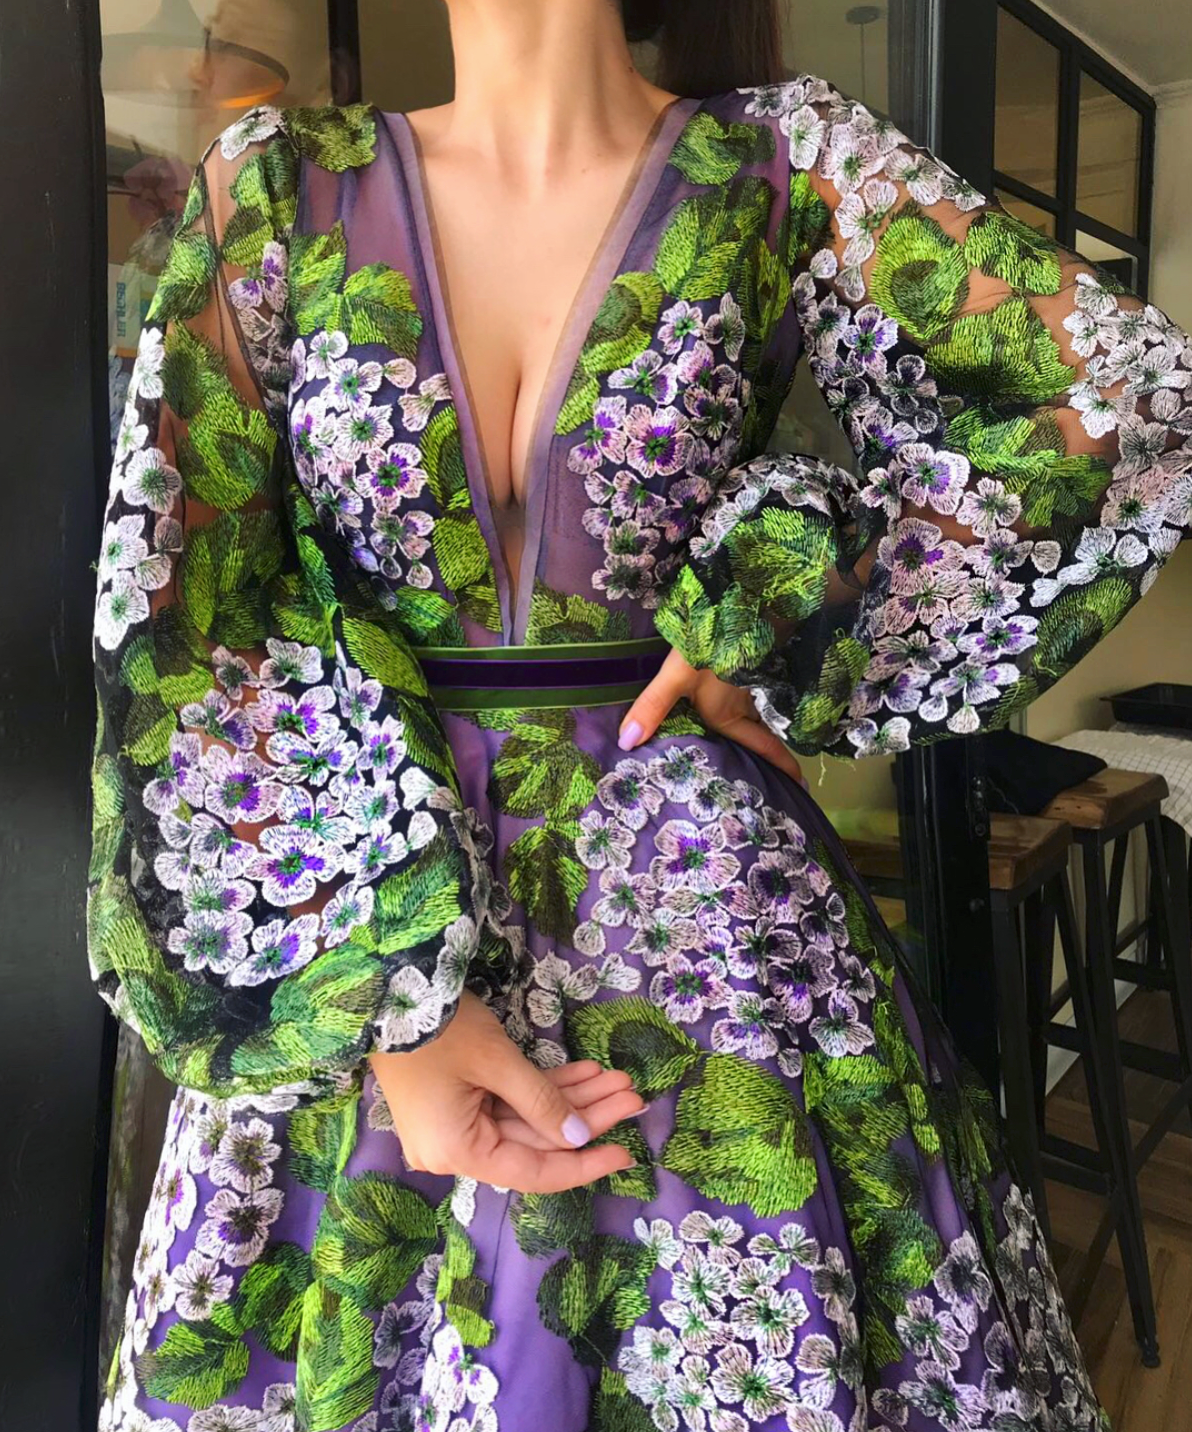 purple and green dress